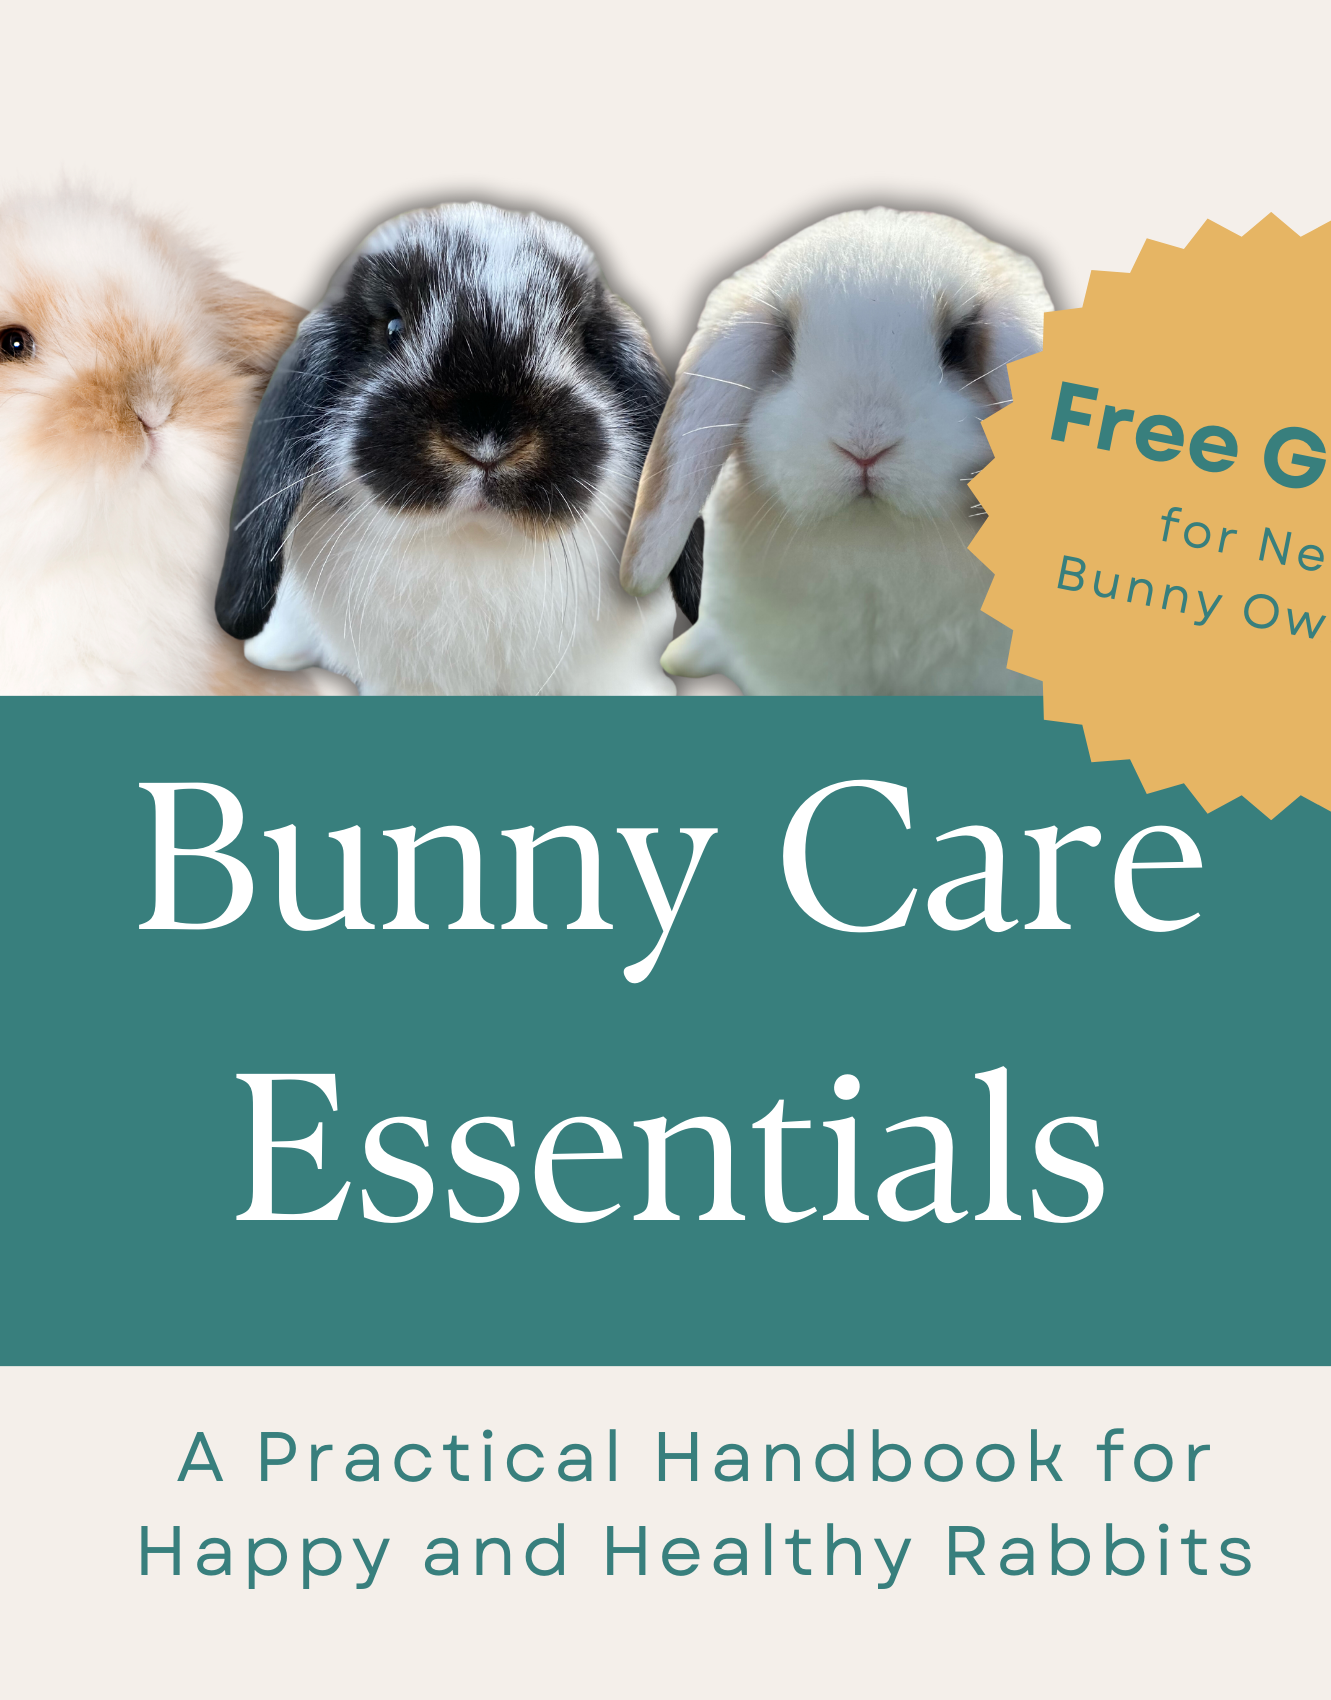 Bunny care Guide